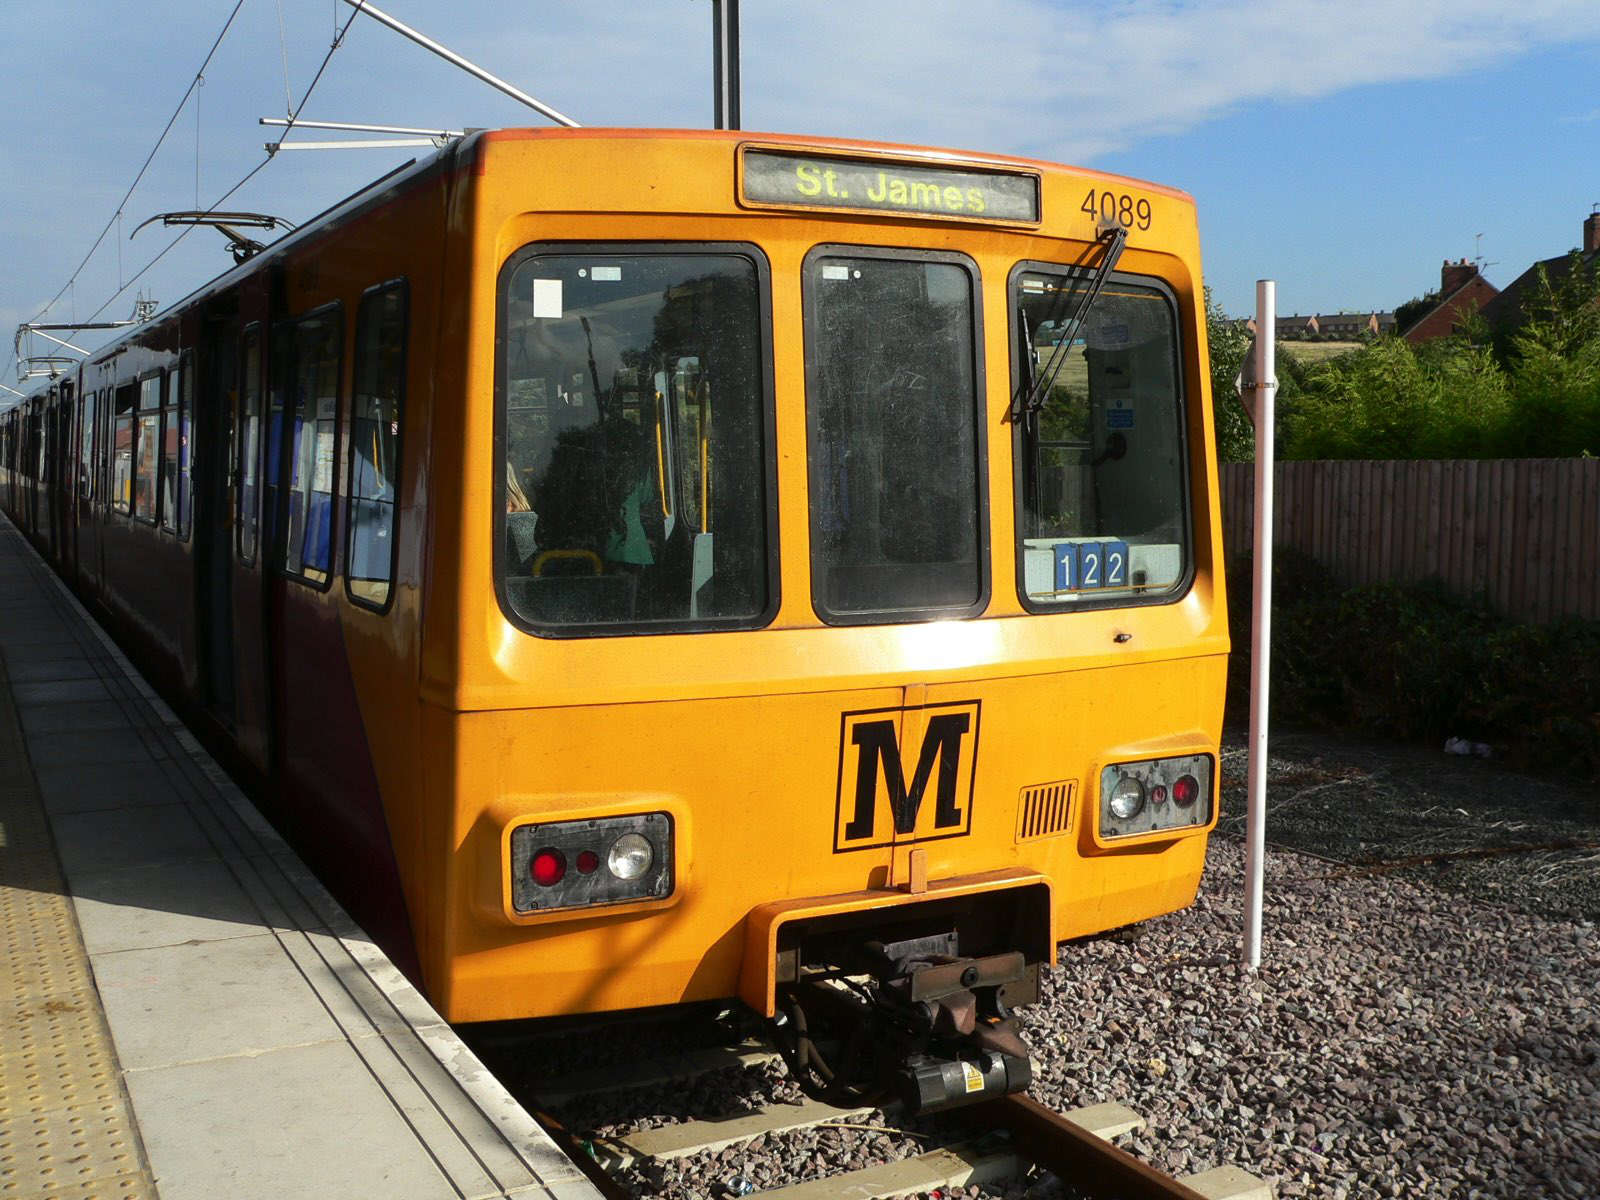 Tyne_and_Wear_Metro_train_4089_at_South_Hylton